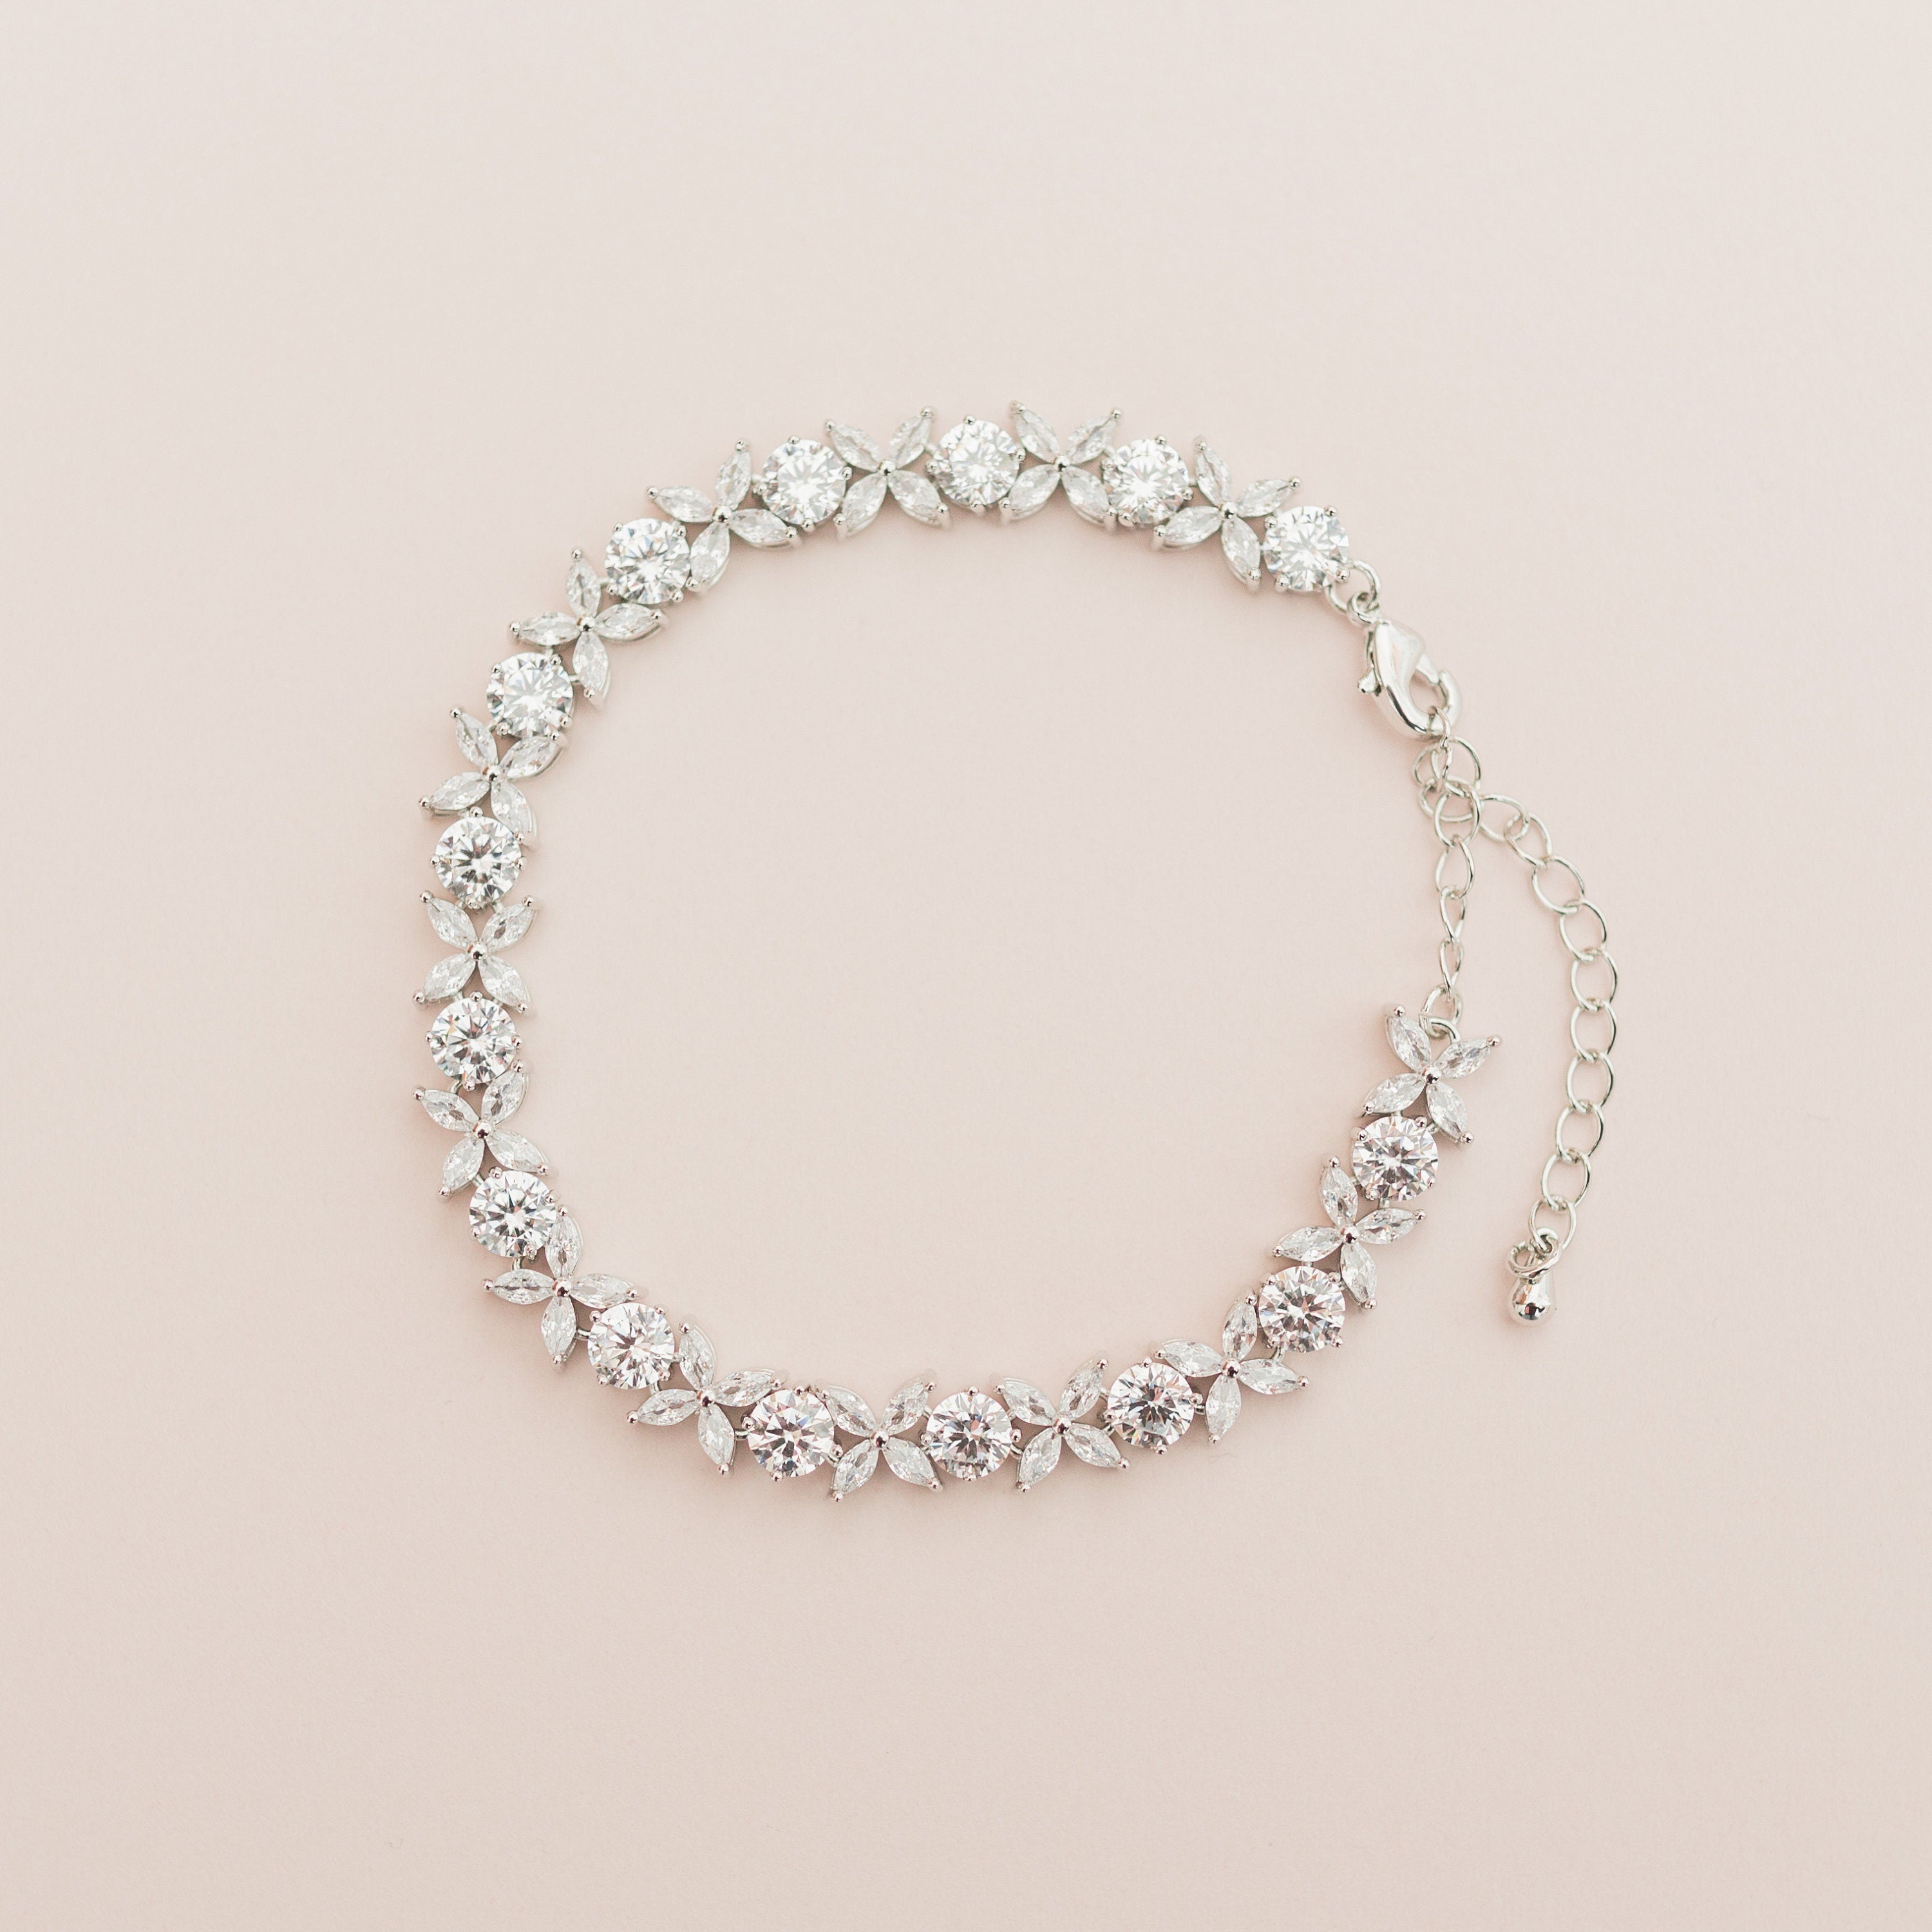 BELLA // Silver bridal bracelet